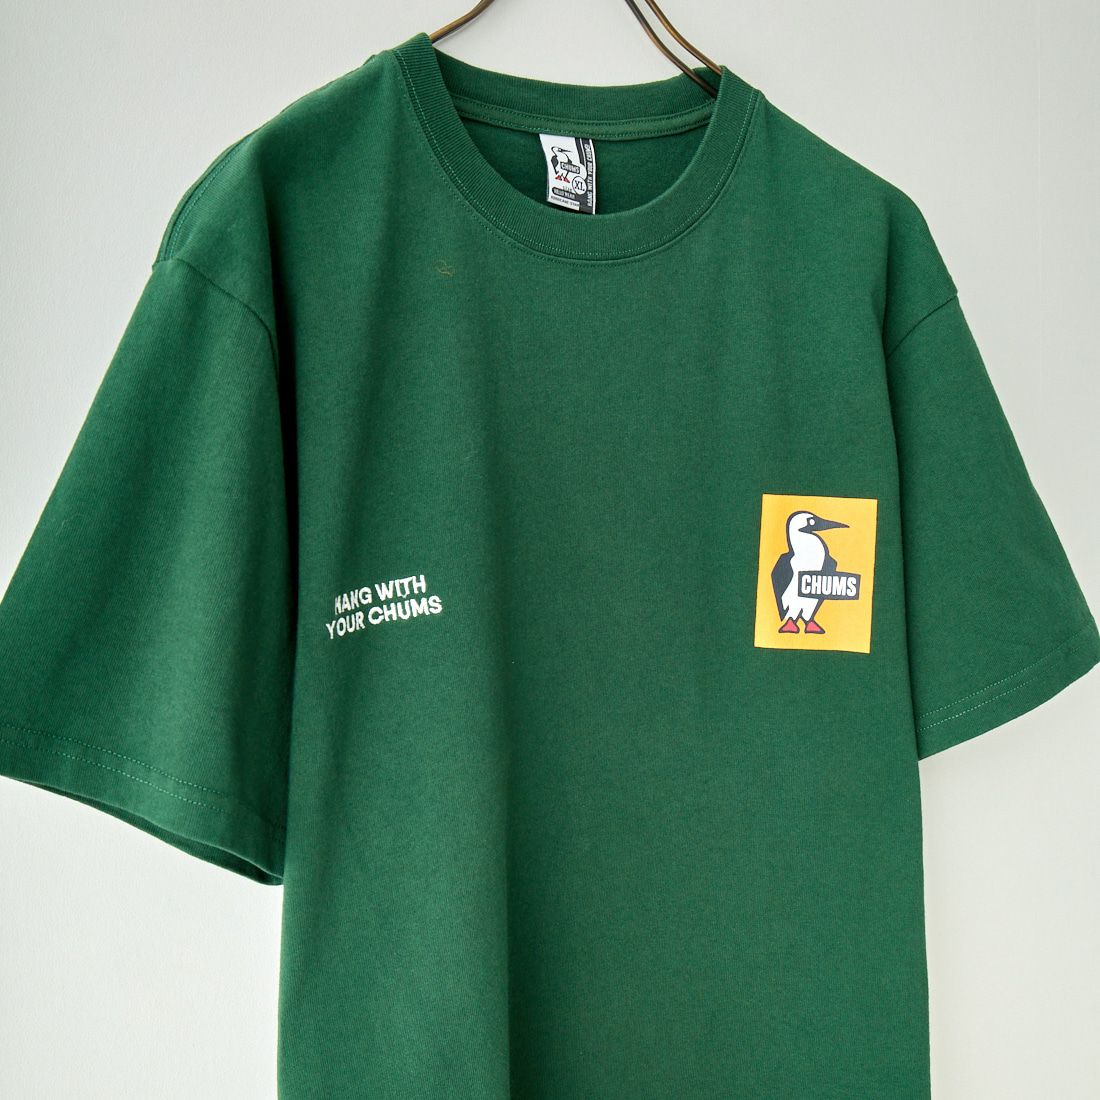 CHUMS [チャムス] 別注 ヒストリーロゴ バックプリントTシャツ [CH01-2311-JF] M080 D.GRN